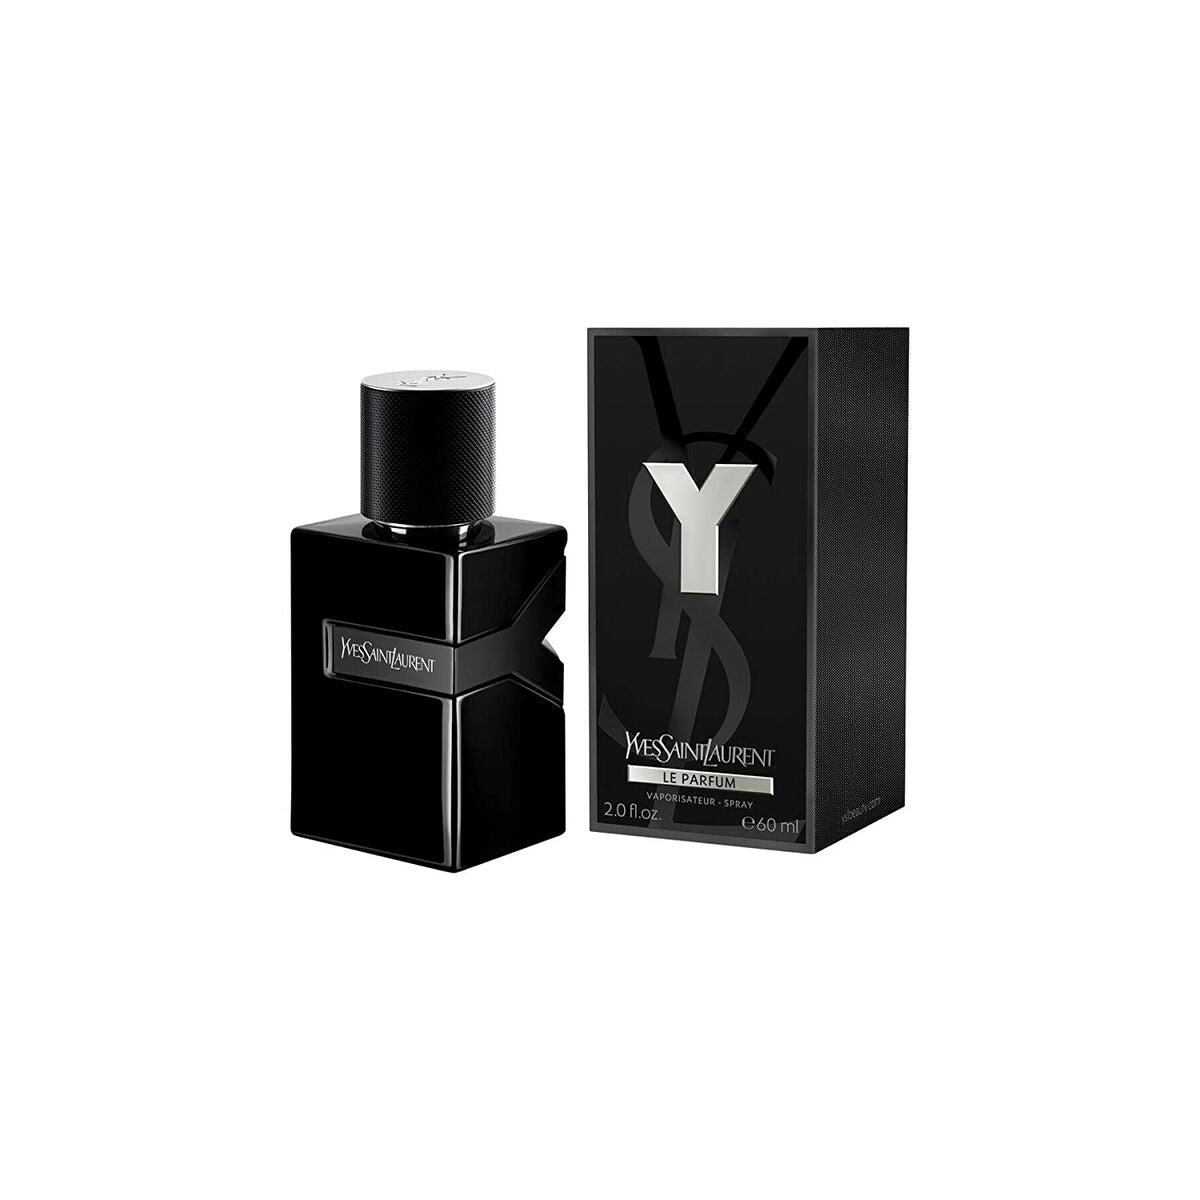 Kaufe Yves Saint Laurent Le Parfum EDP 60 ml - Herren bei AWK Flagship um € 96.00